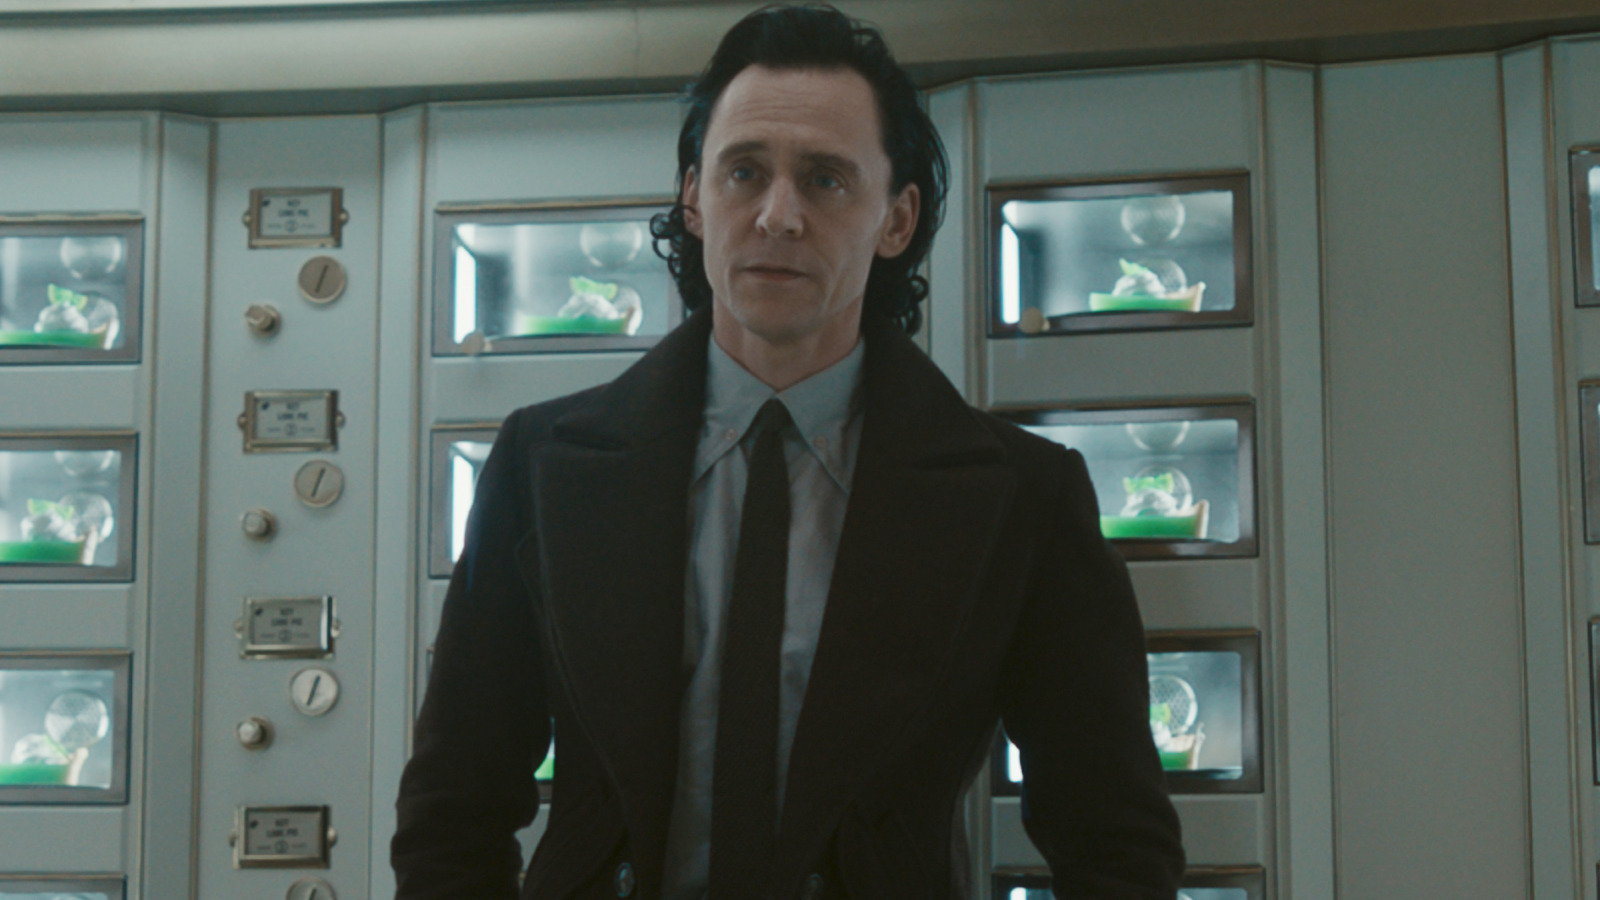 The Loki Season 2 Trailer Is Hiding A Zaniac Easter Egg In Plain Sight